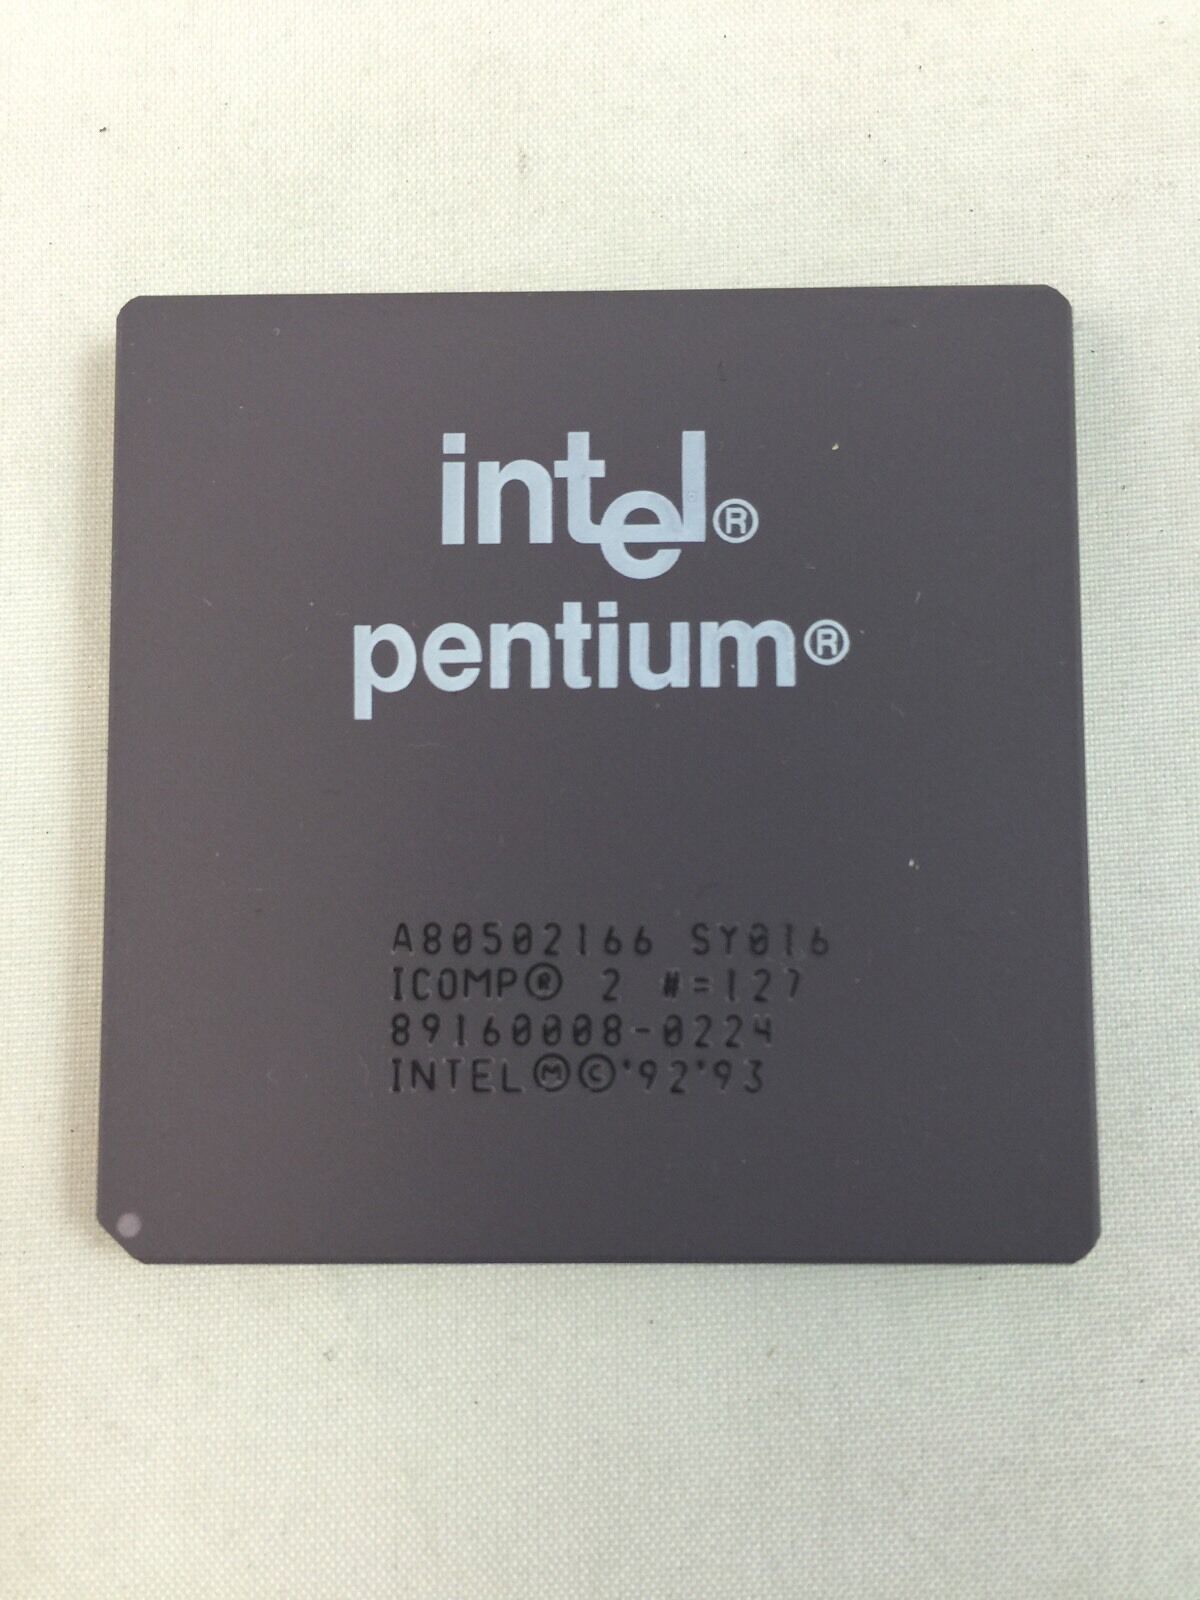 Intel Pentium 166 Non-MMX CPU    A80502166 SY016